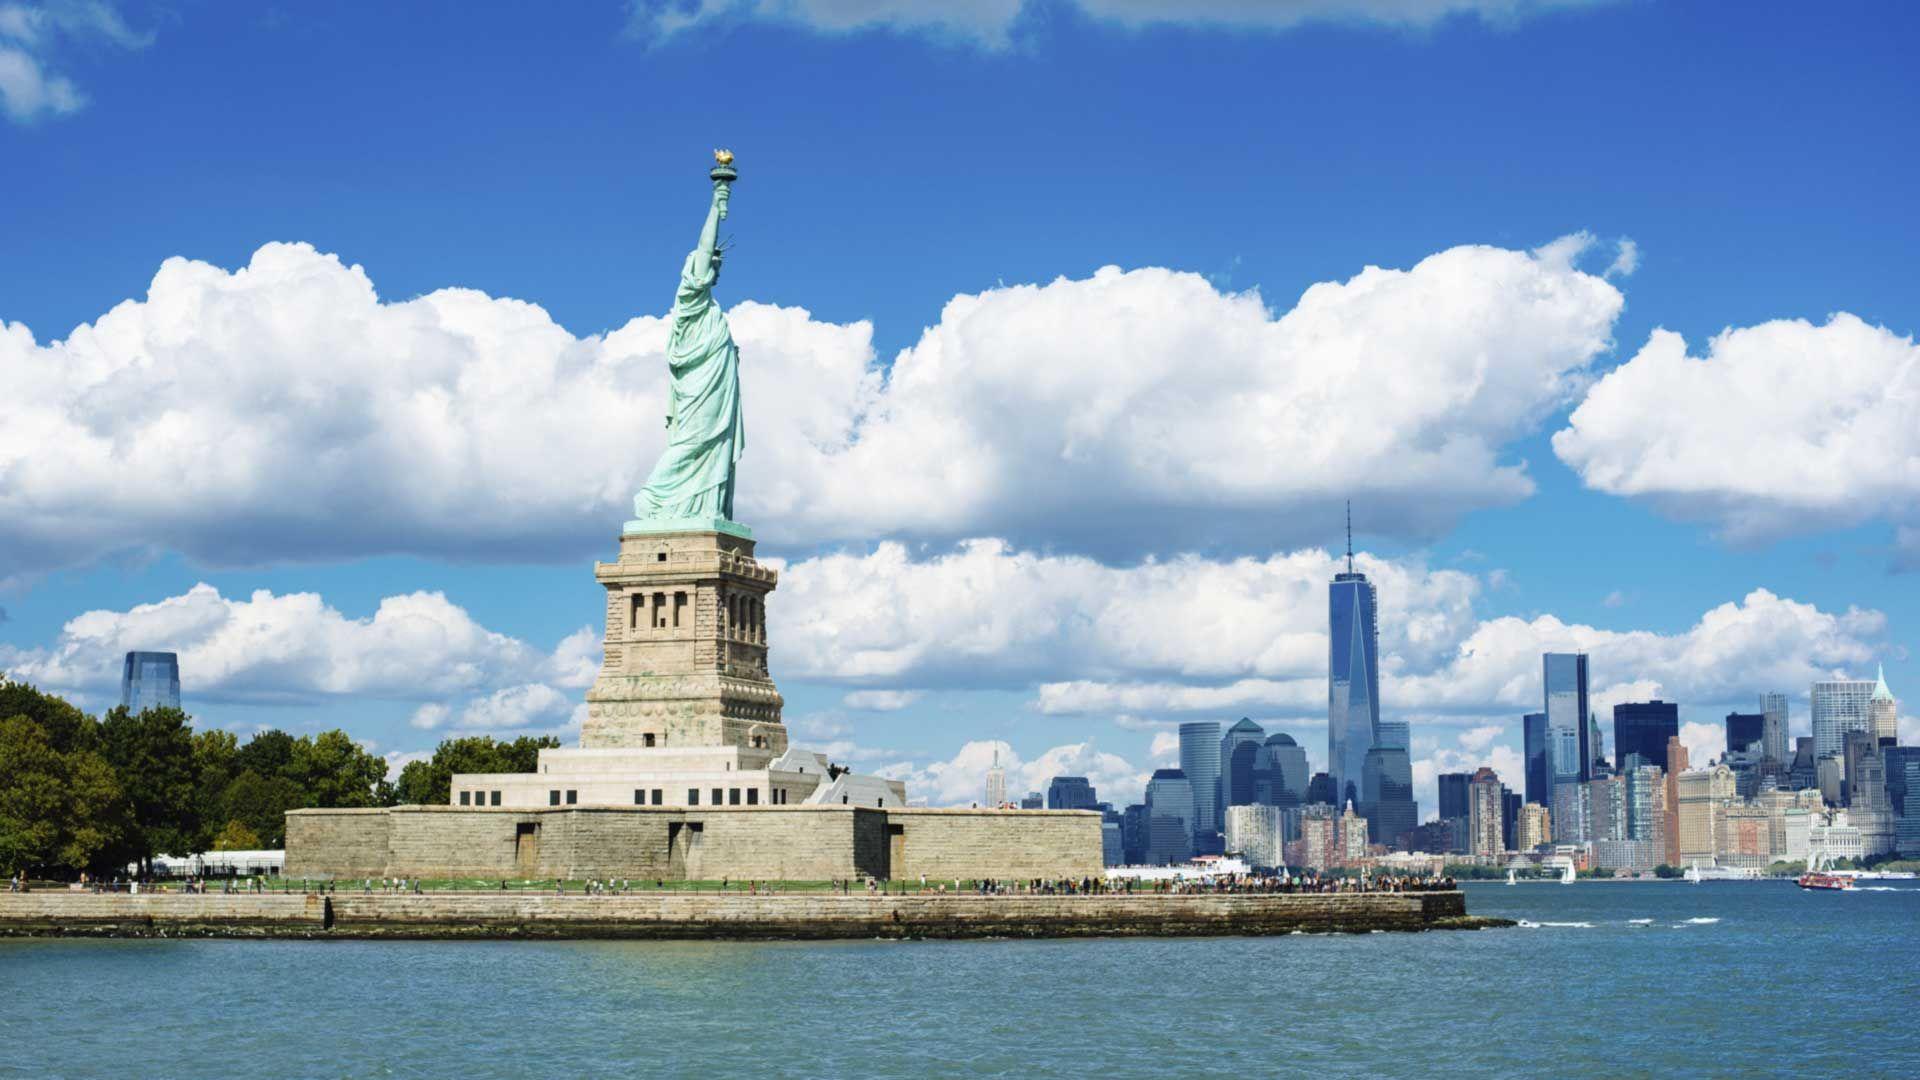 Statue Of Liberty Wallpaper Free Download. Wallpaper 4k